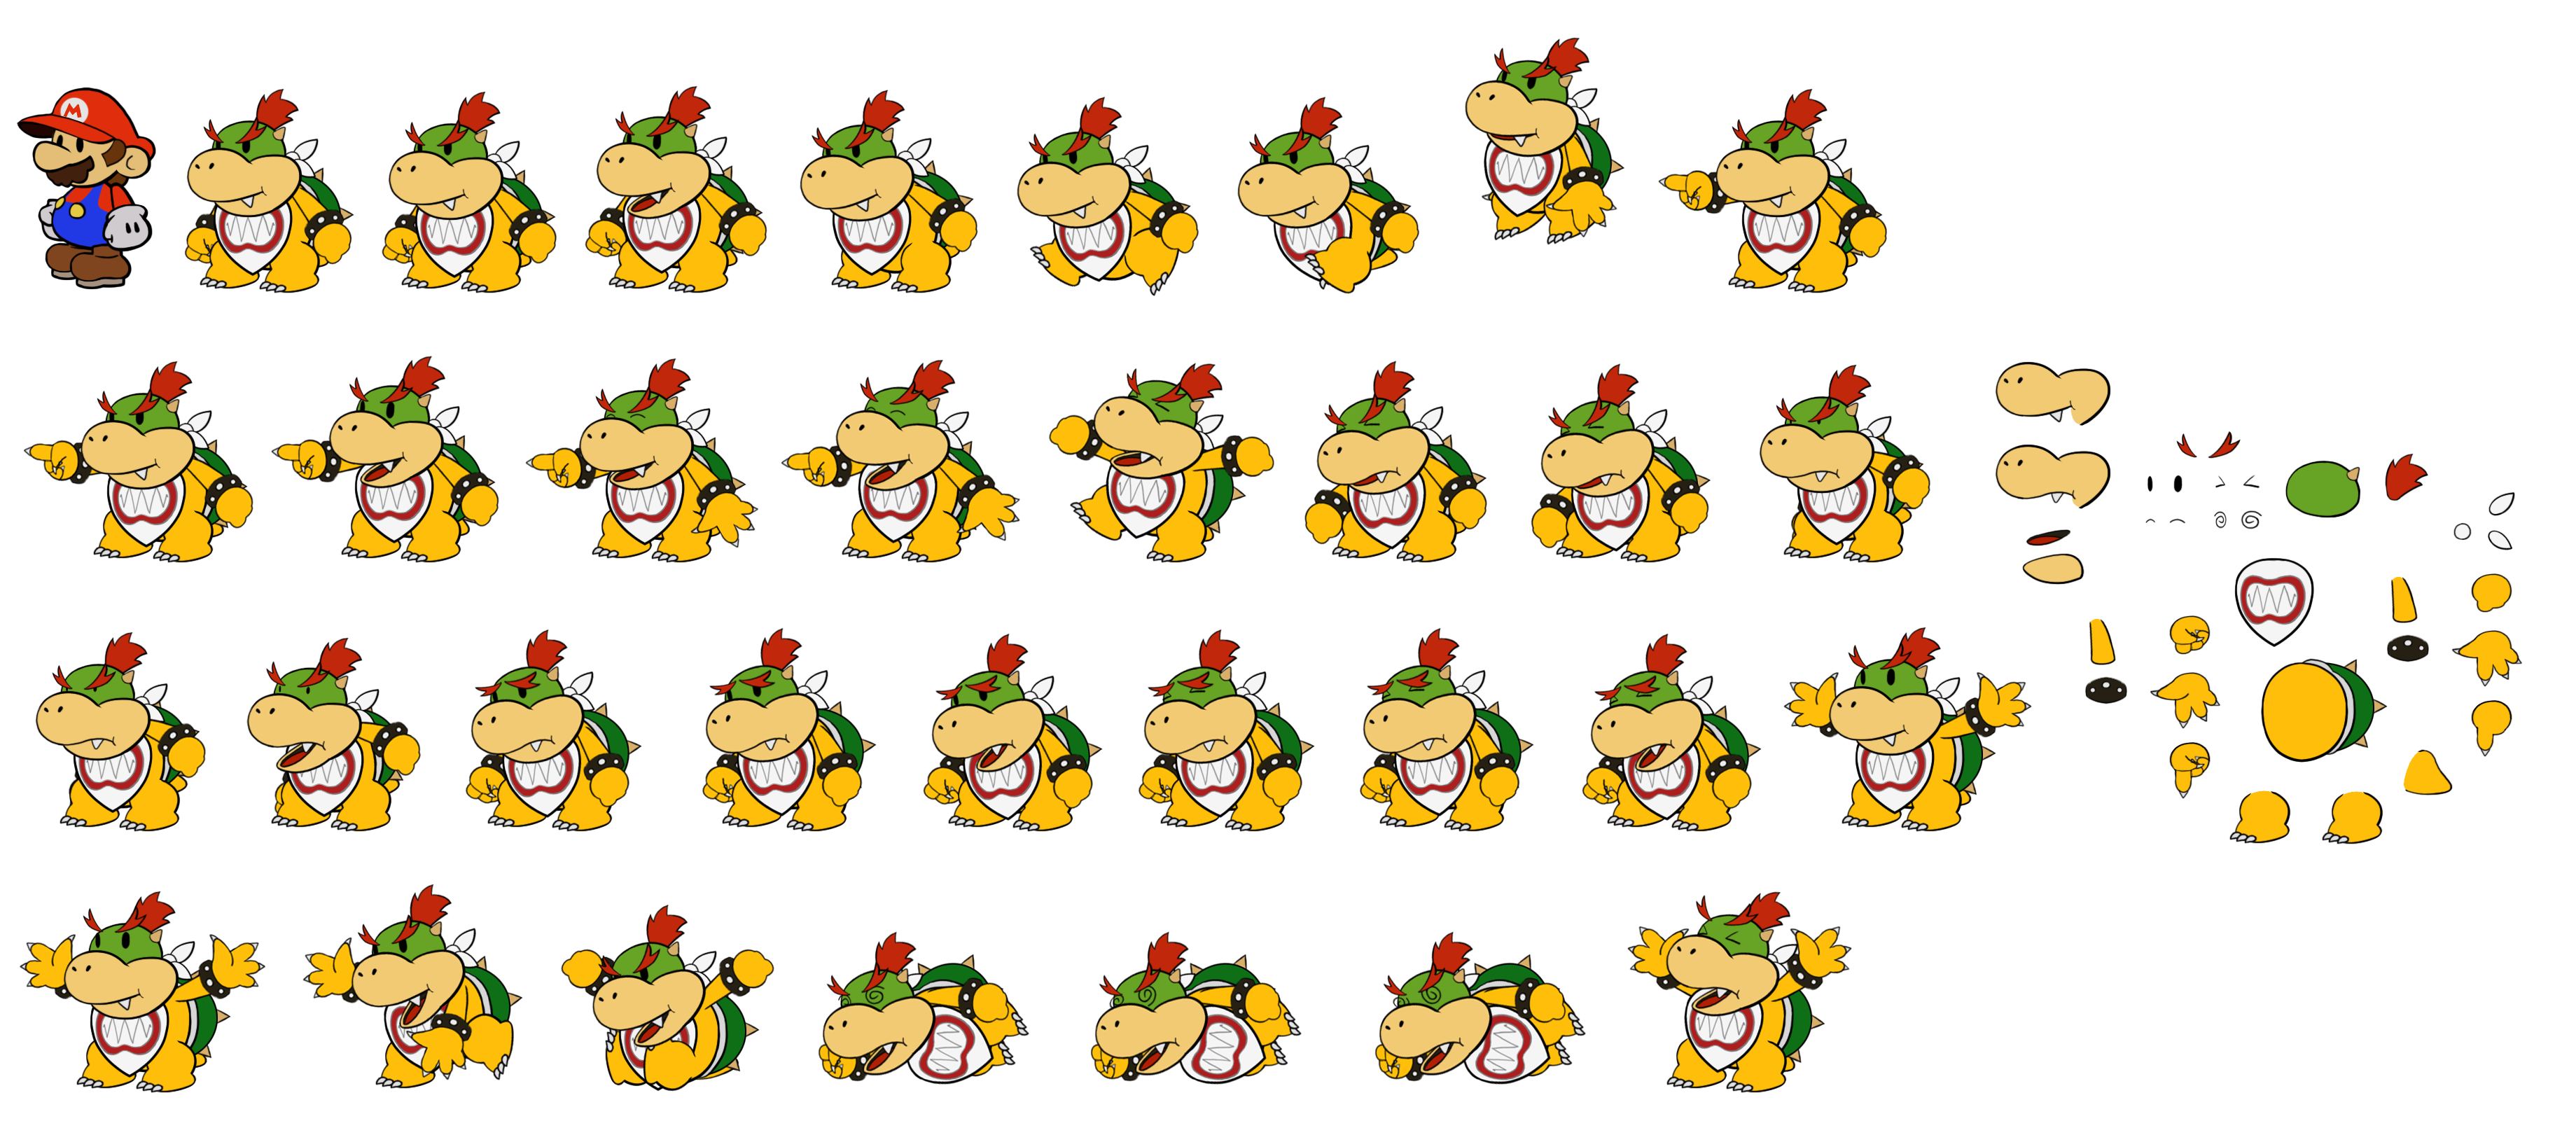 Mario Customs - Bowser Jr. (Paper Mario-Style)